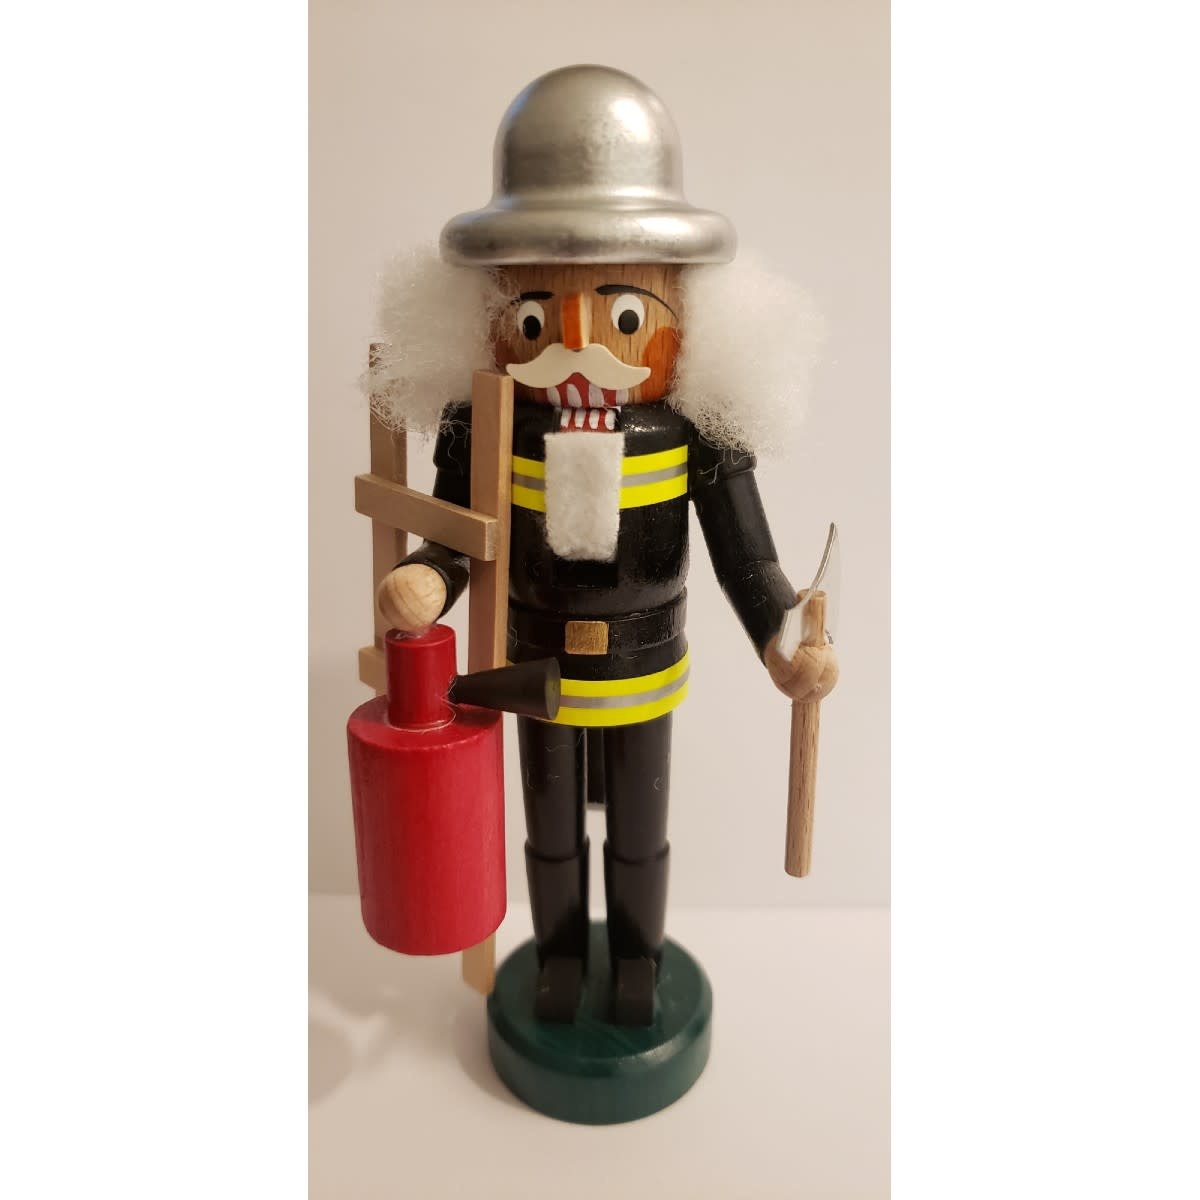 Heidenreich 071/171 Nutcracker Mini Fireman - Approx 5 inches